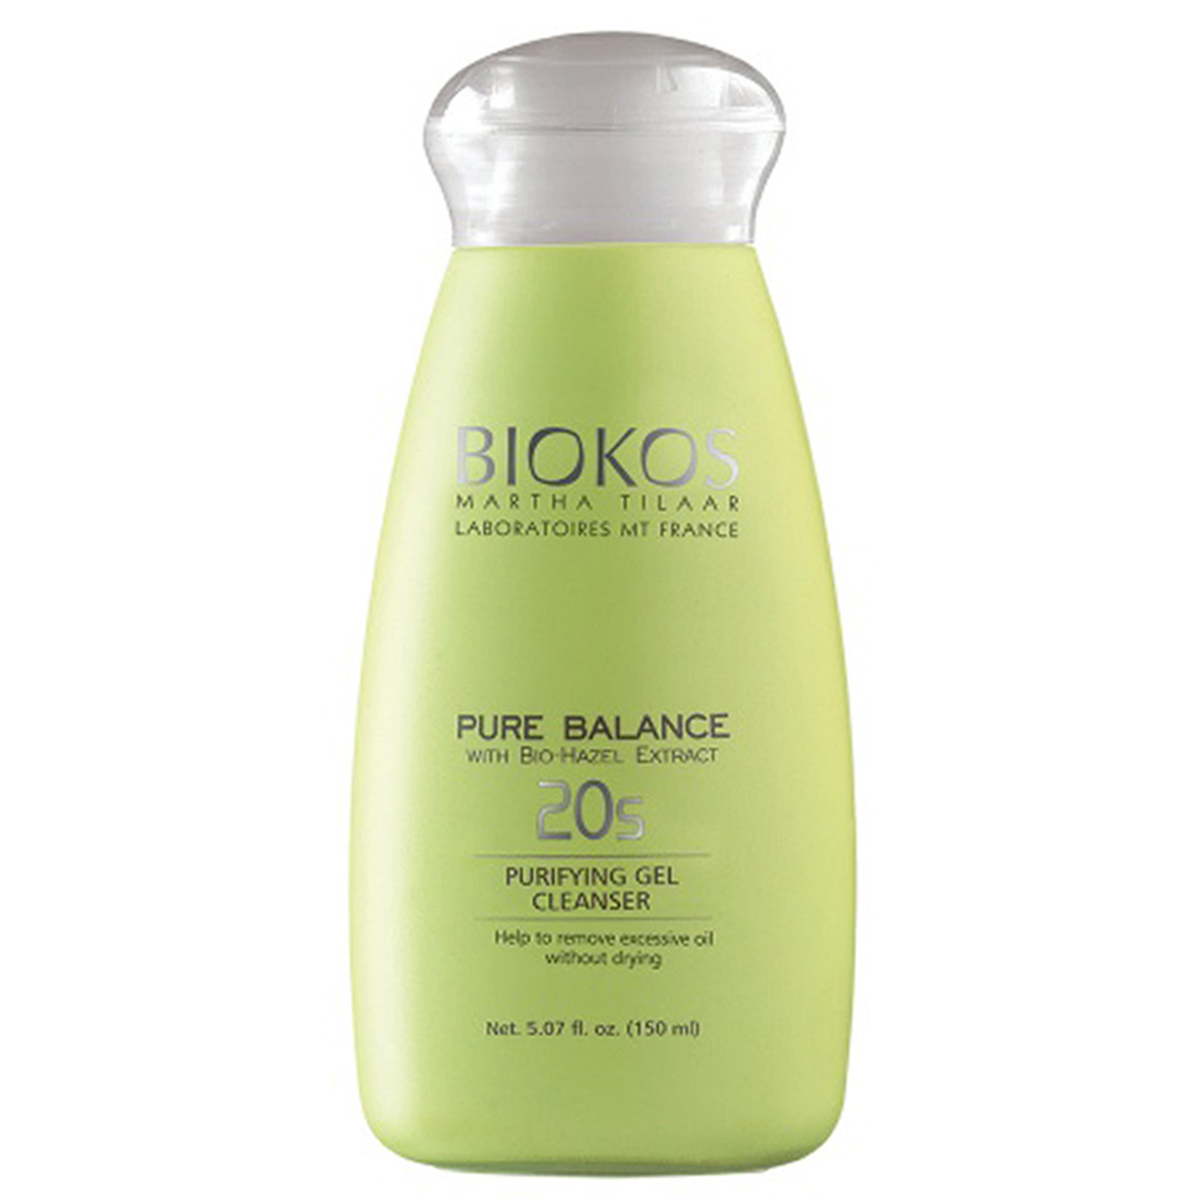 Biokos---20s-Pure-Balance-Purifying-Gel-Cleanser-sfw(1)